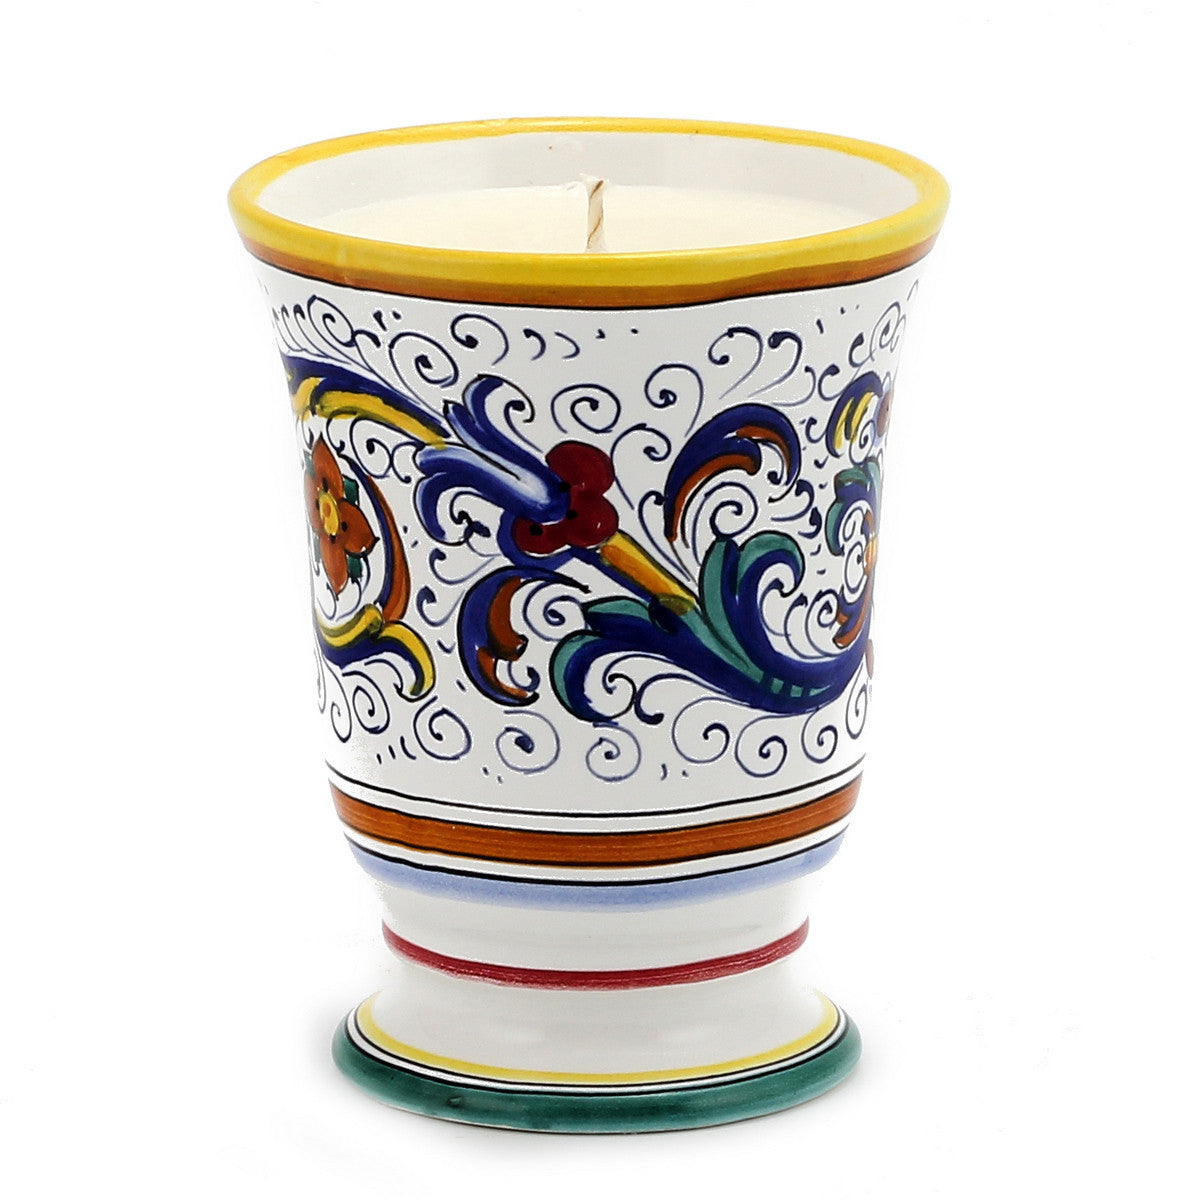 HOLIDAYS DERUTA CANDLES: Bell Cup Candle ~ Ricco Deruta Design - Artistica.com